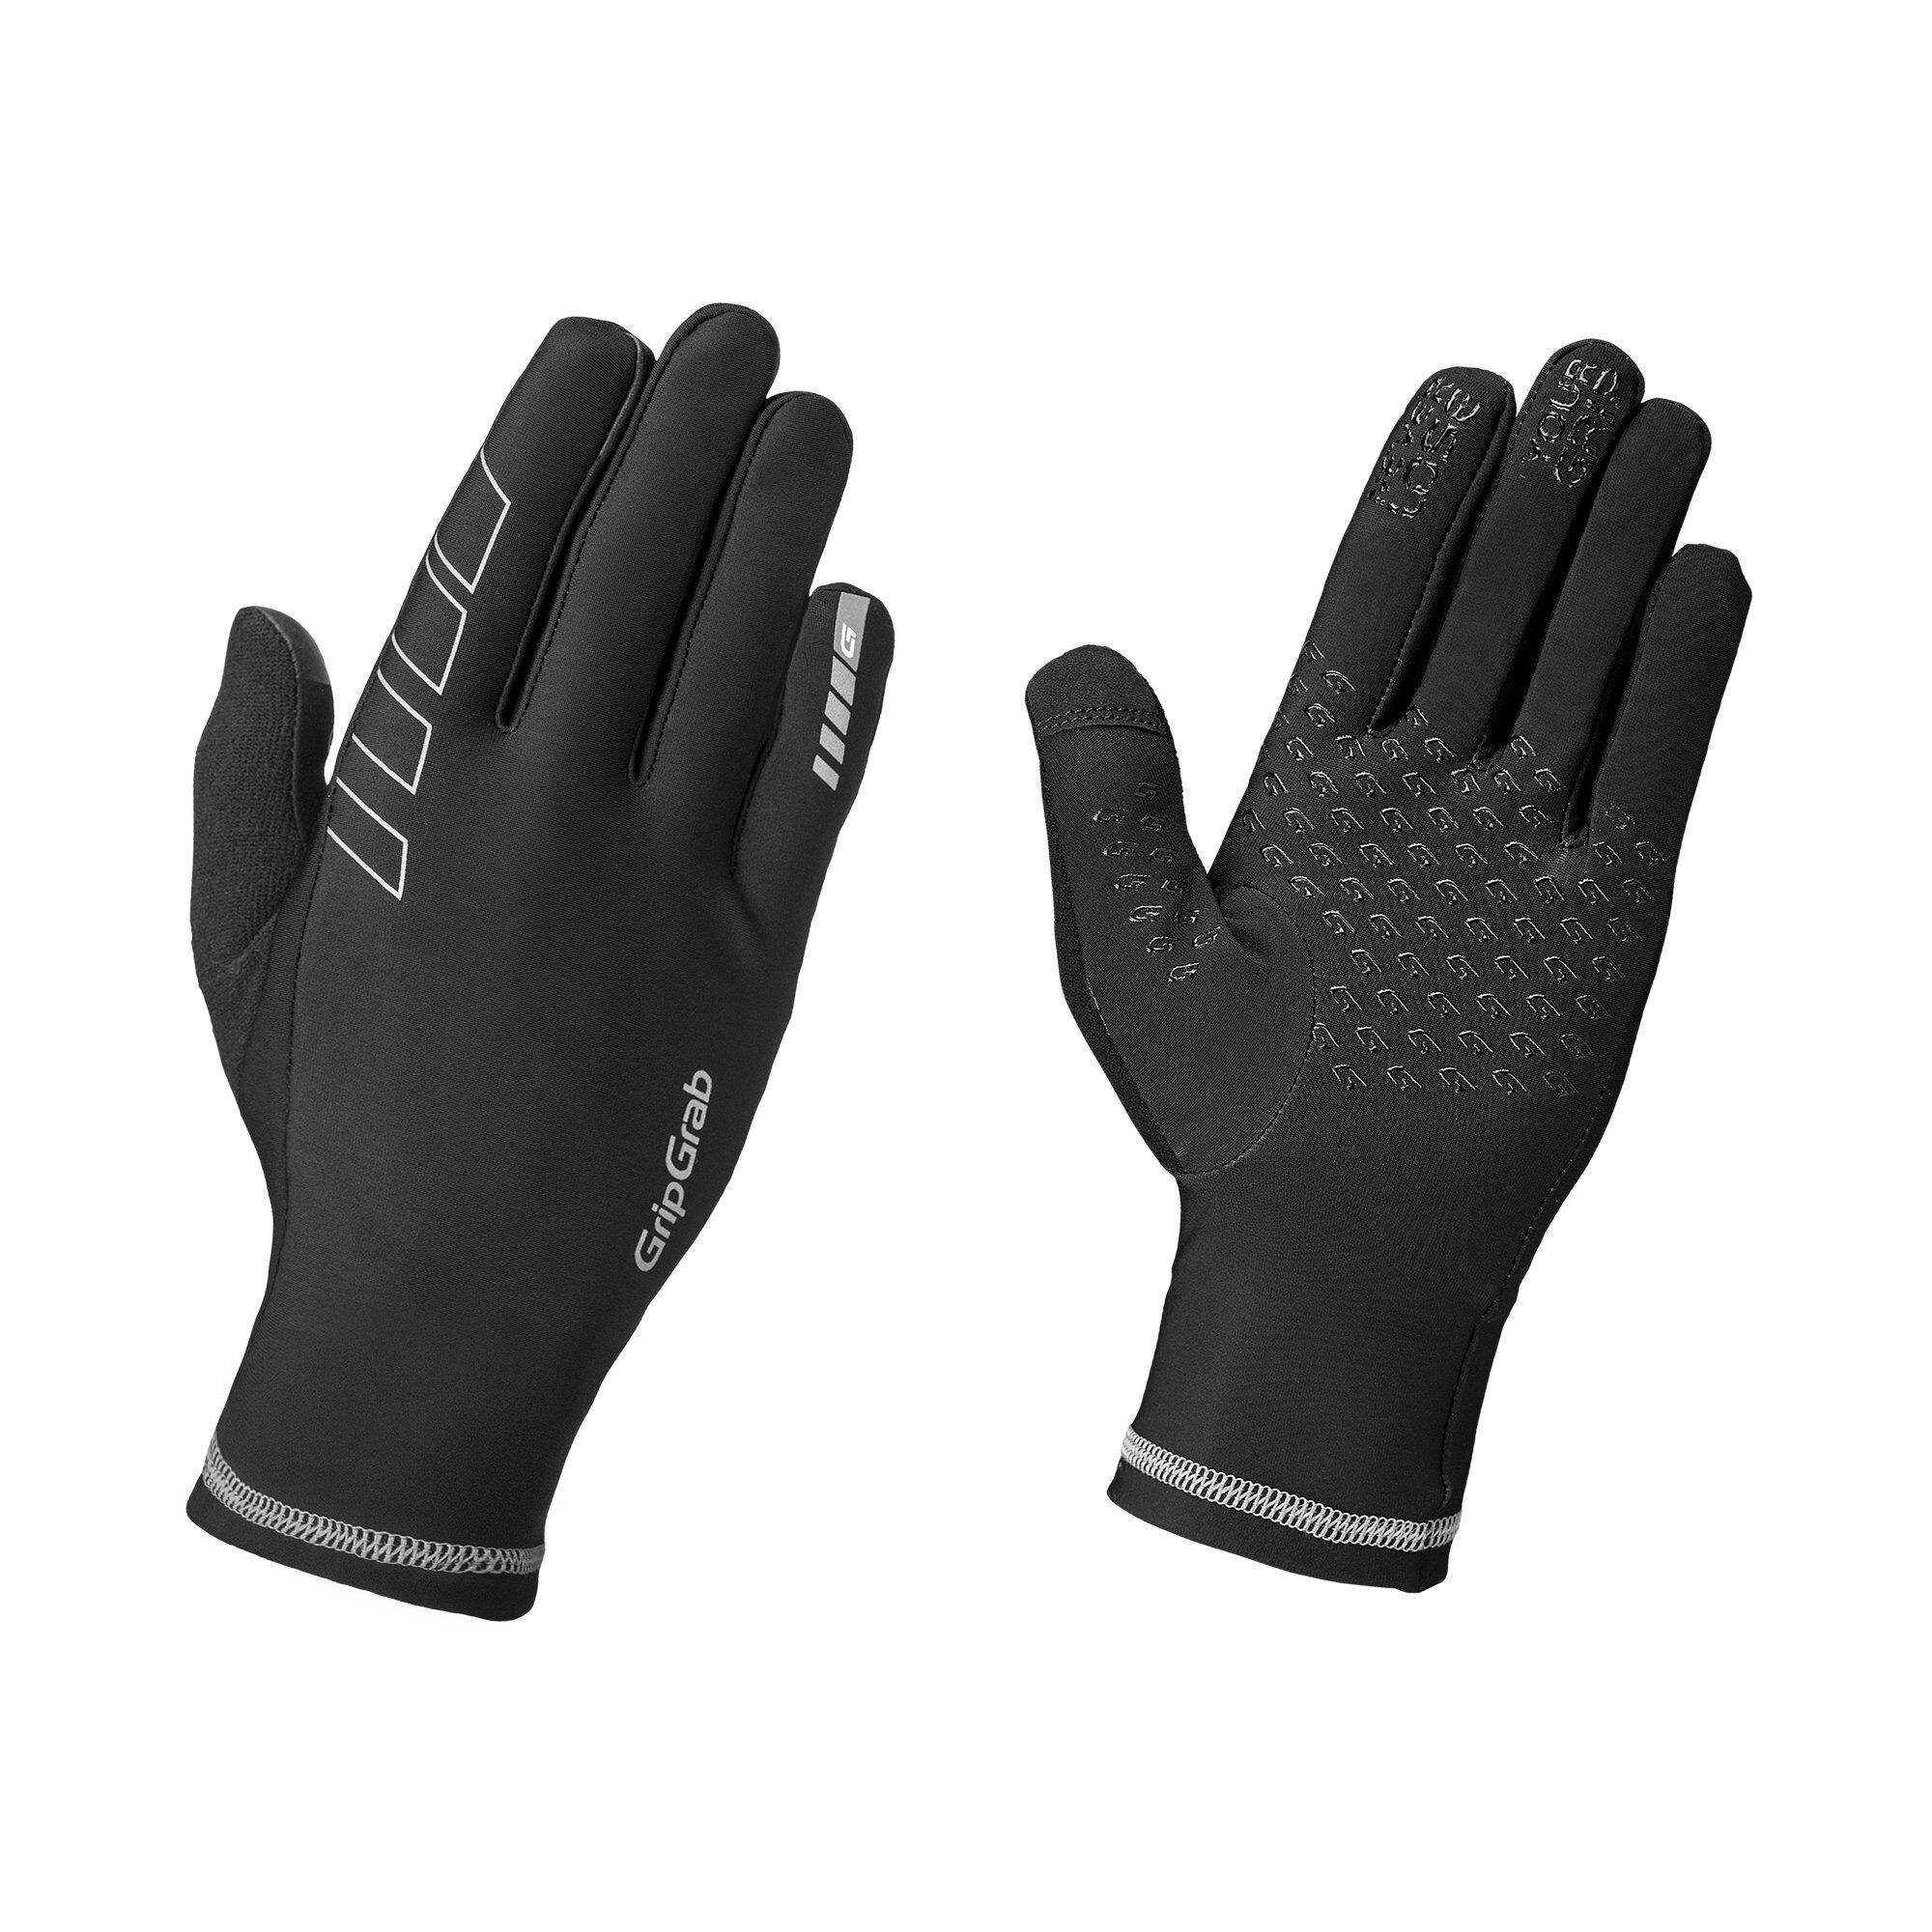 Grip Grab Insulator Midseason Glove - Cycling gloves